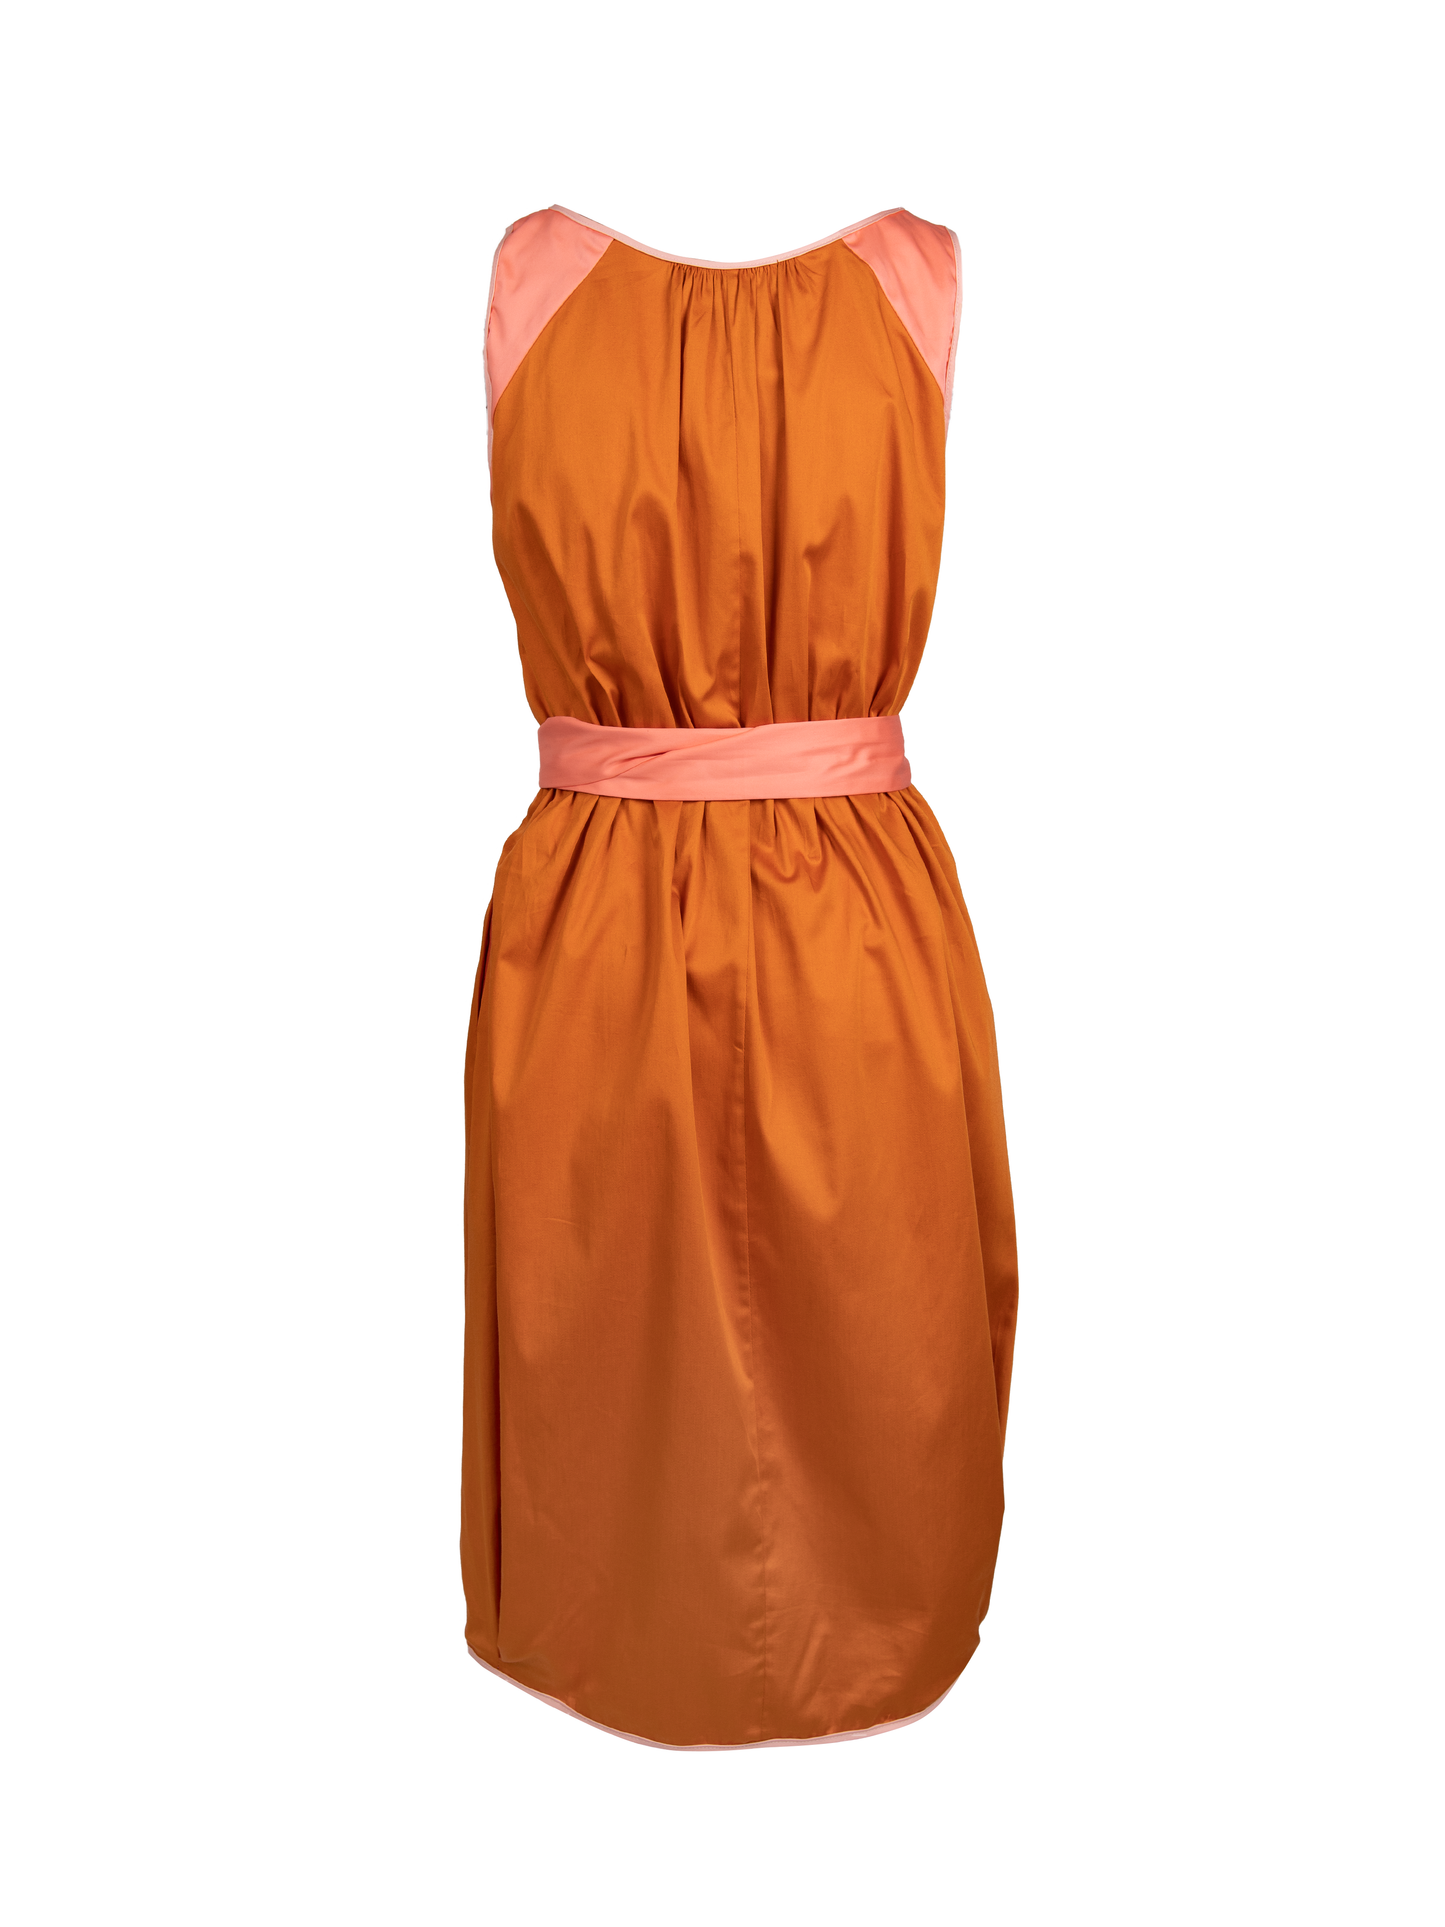 GUILLOTINE Hourglass Dress | Burnt Orange